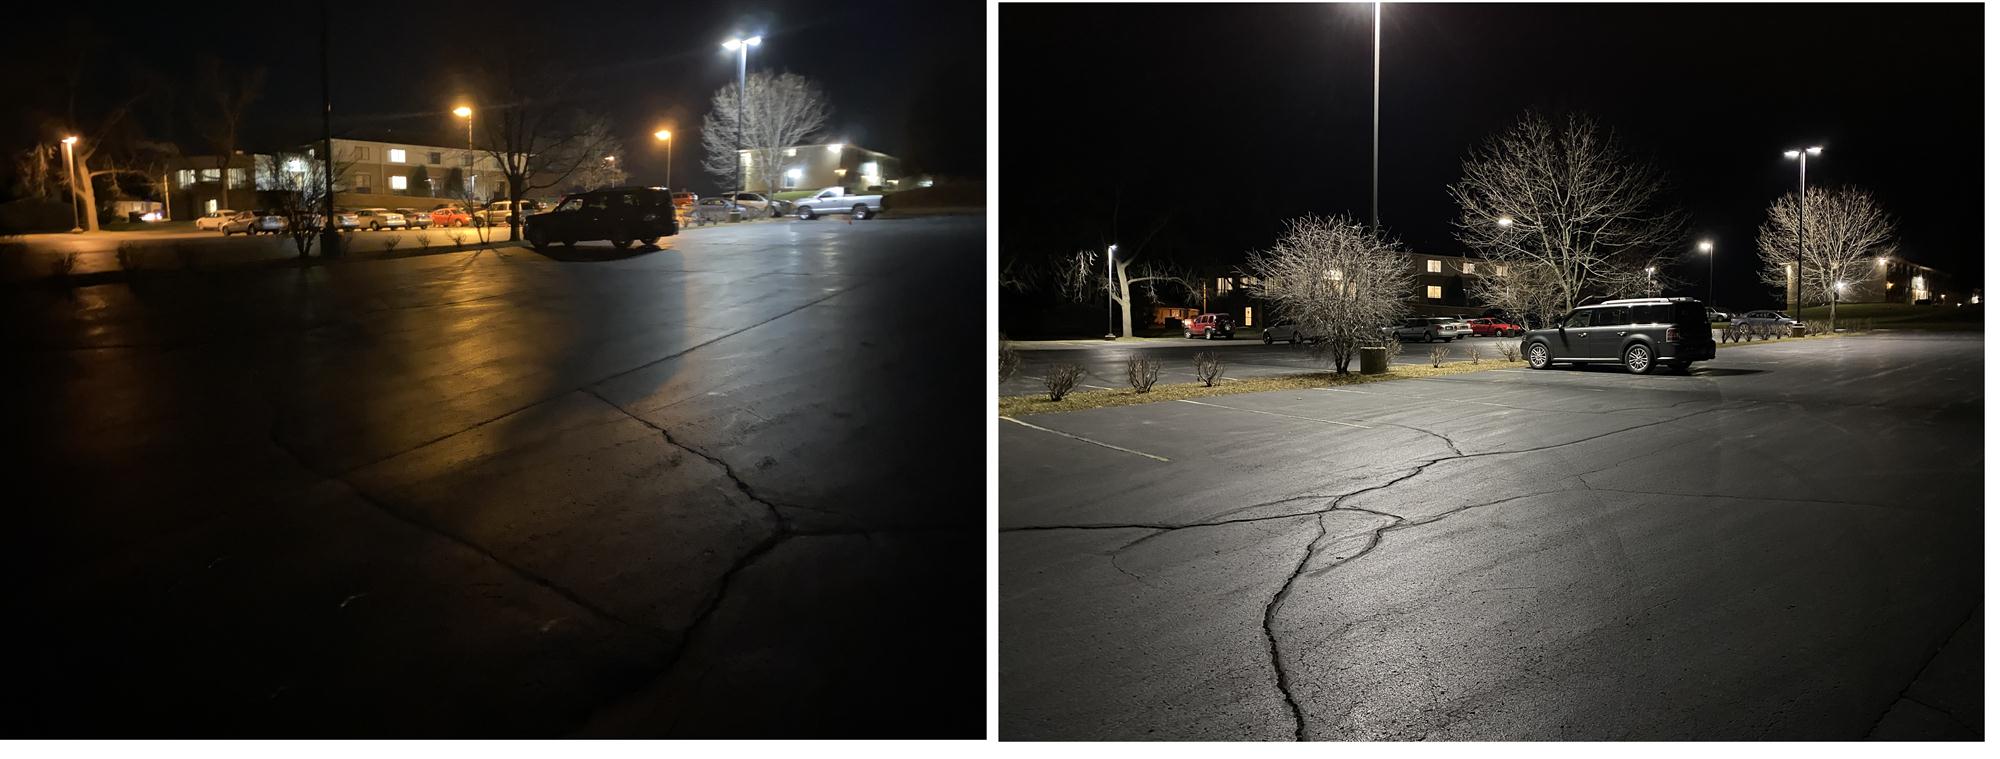 Outdoor University LED lighting for parking lot